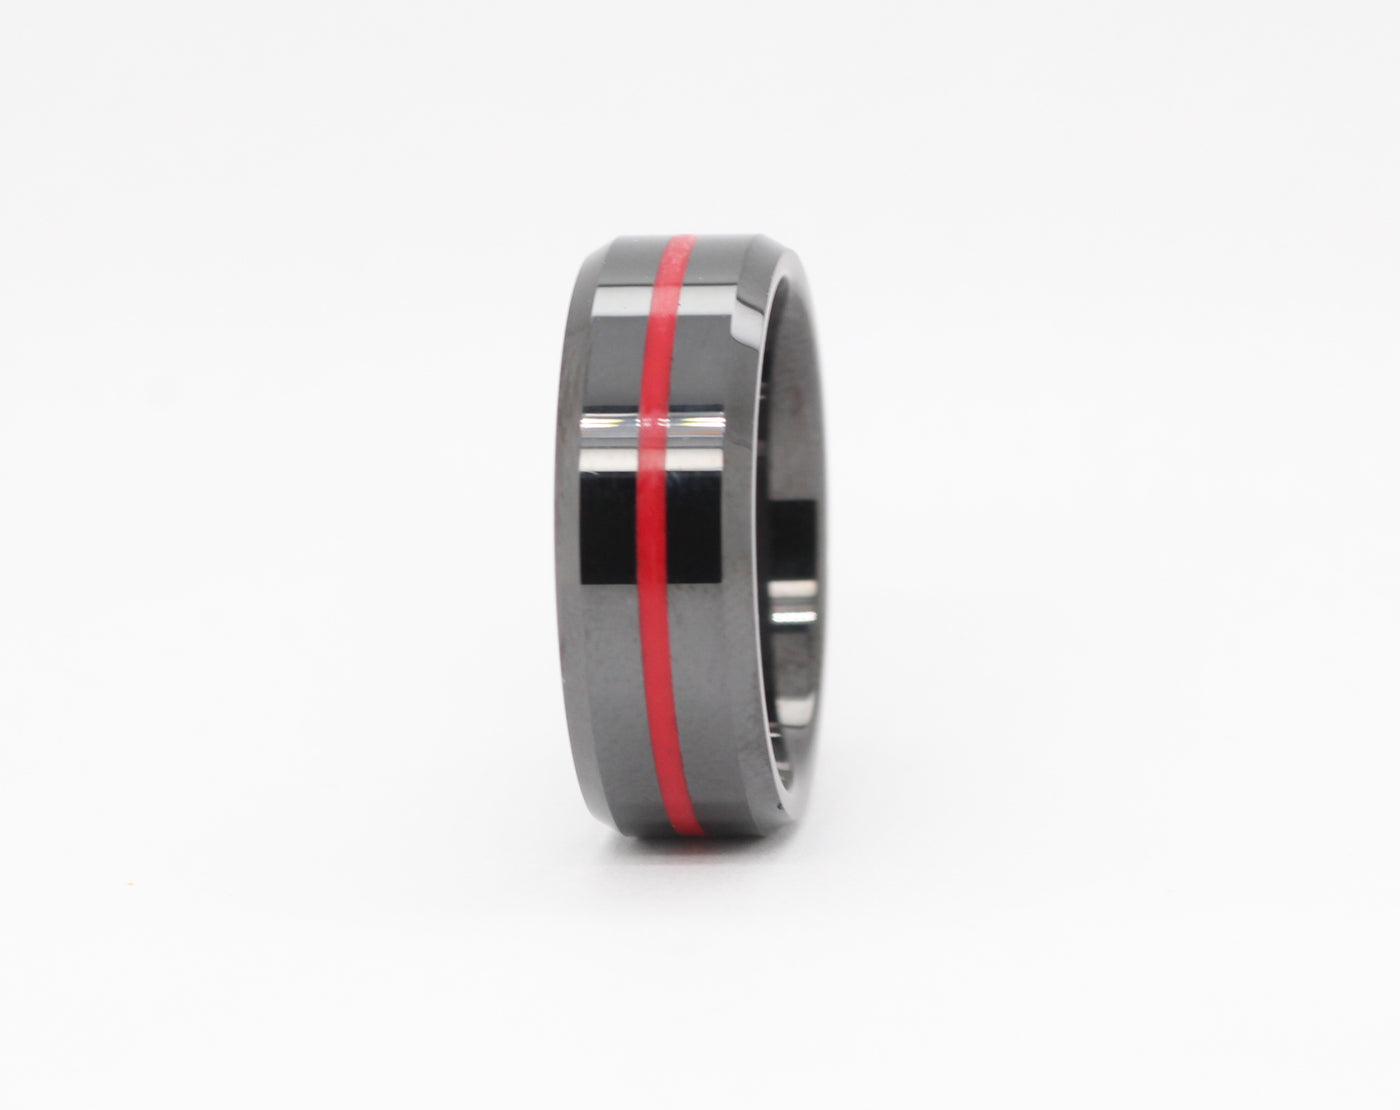 8mm Black Ceramic bevel edge thin red inlay ring